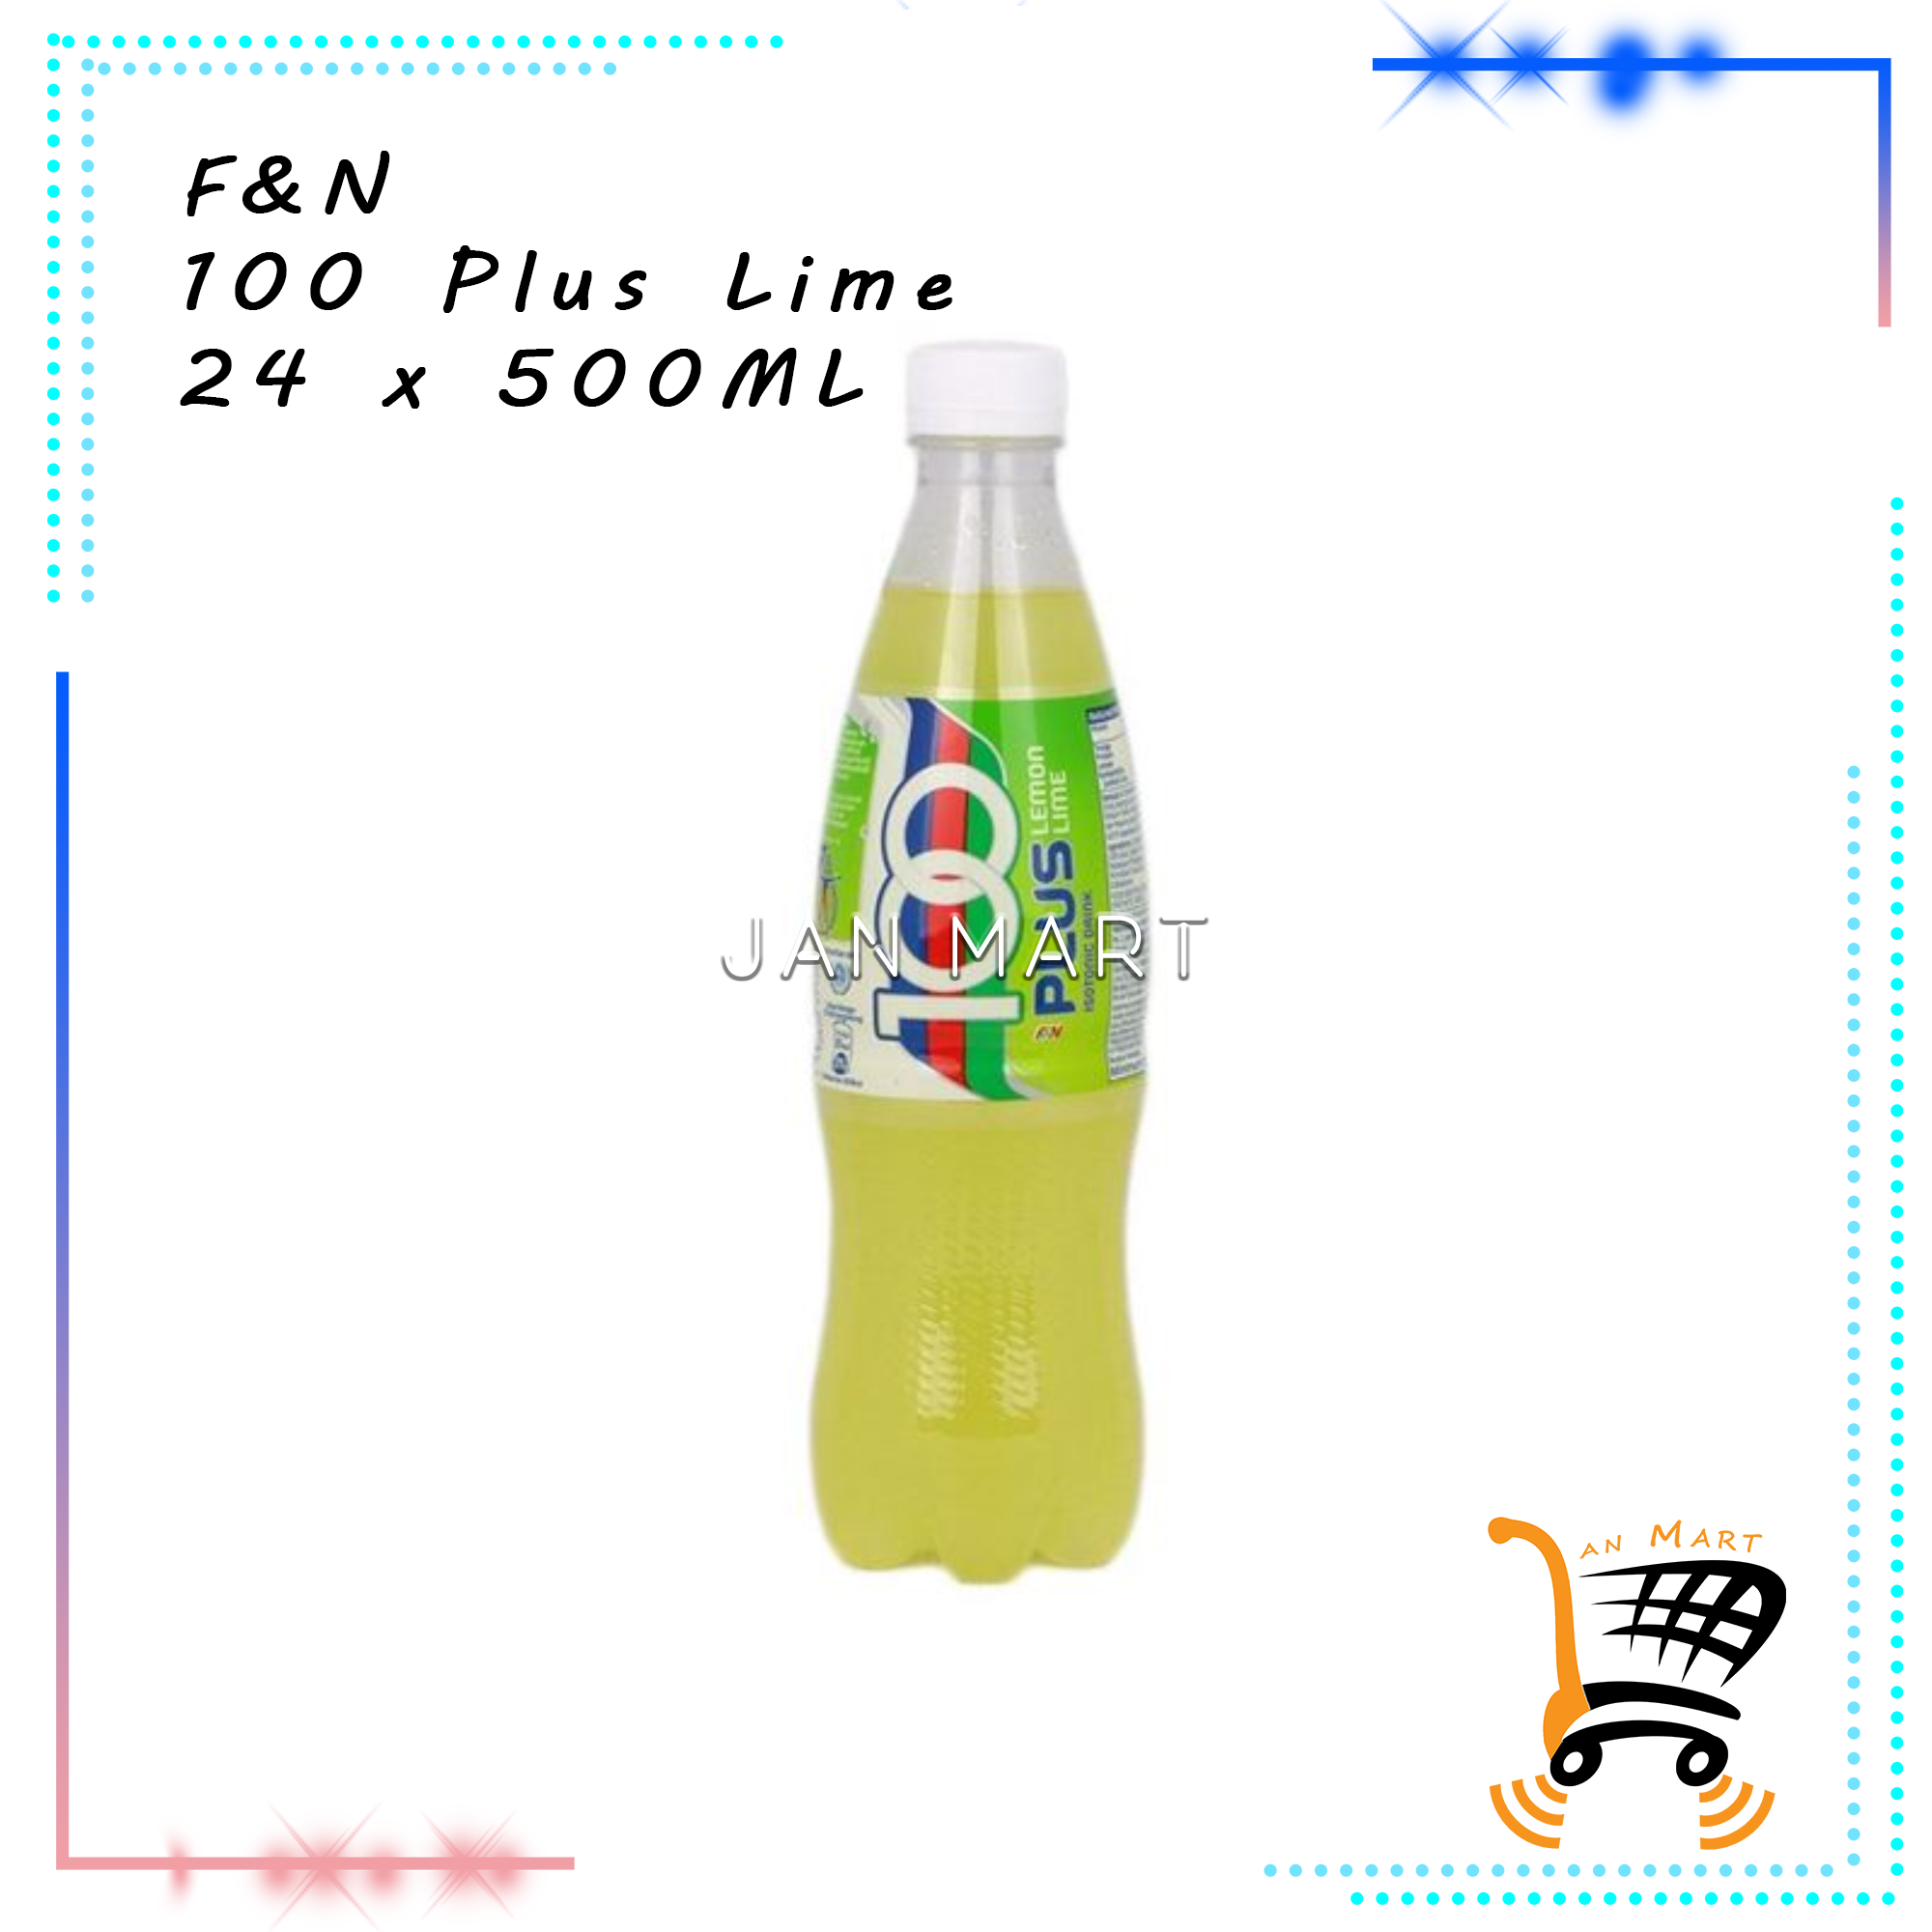 F&N 100 Plus Lime 24 x 500ML